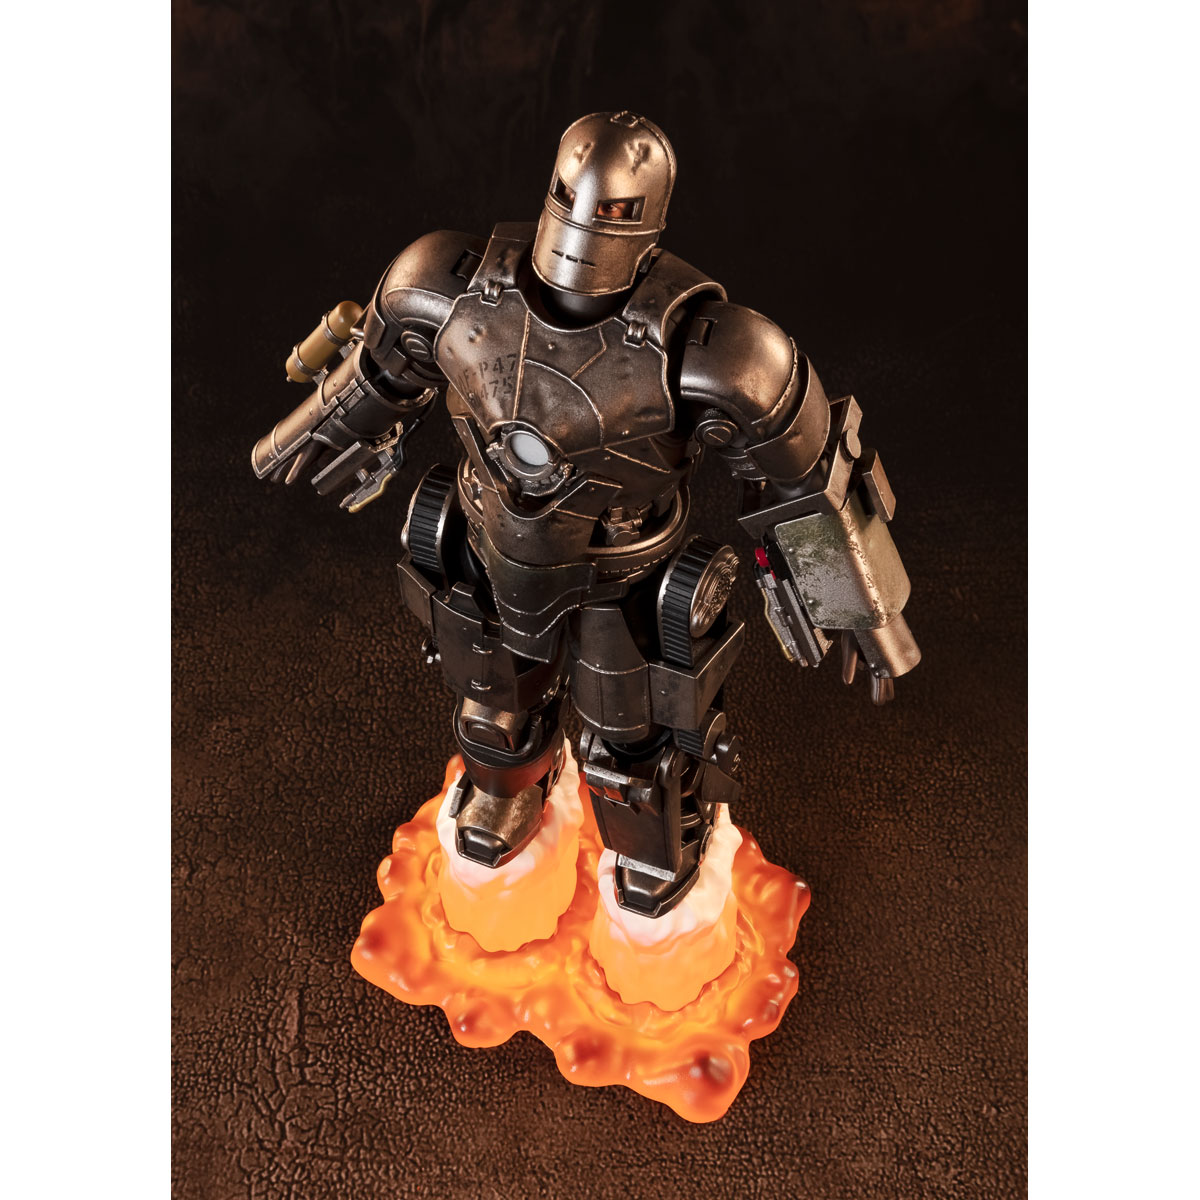 Bandai Spirits Iron Man 2 S.h Figuarts Action Figure War Machine for sale online 